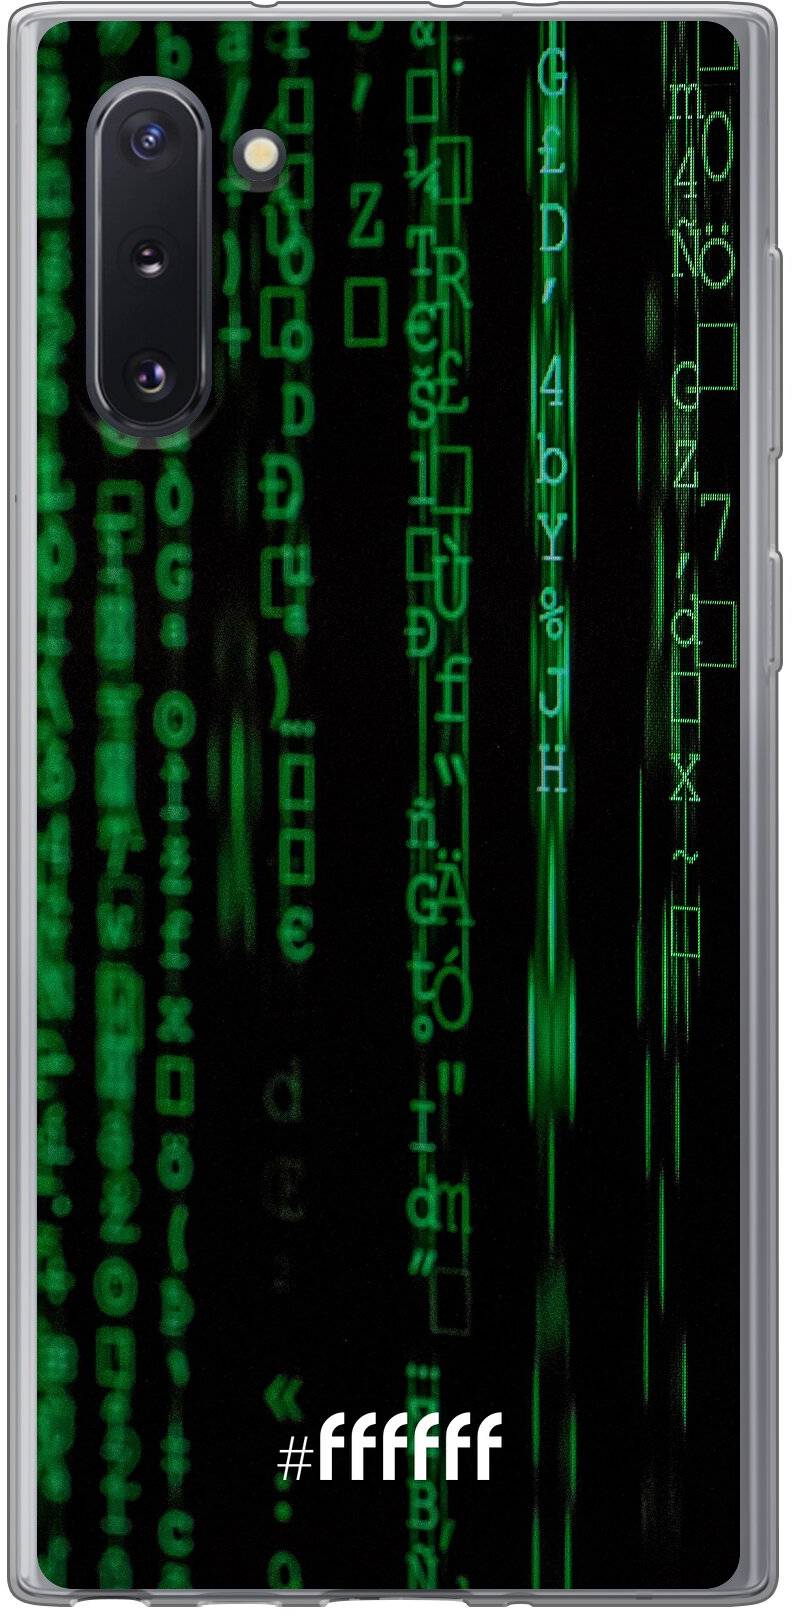 Hacking The Matrix Galaxy Note 10